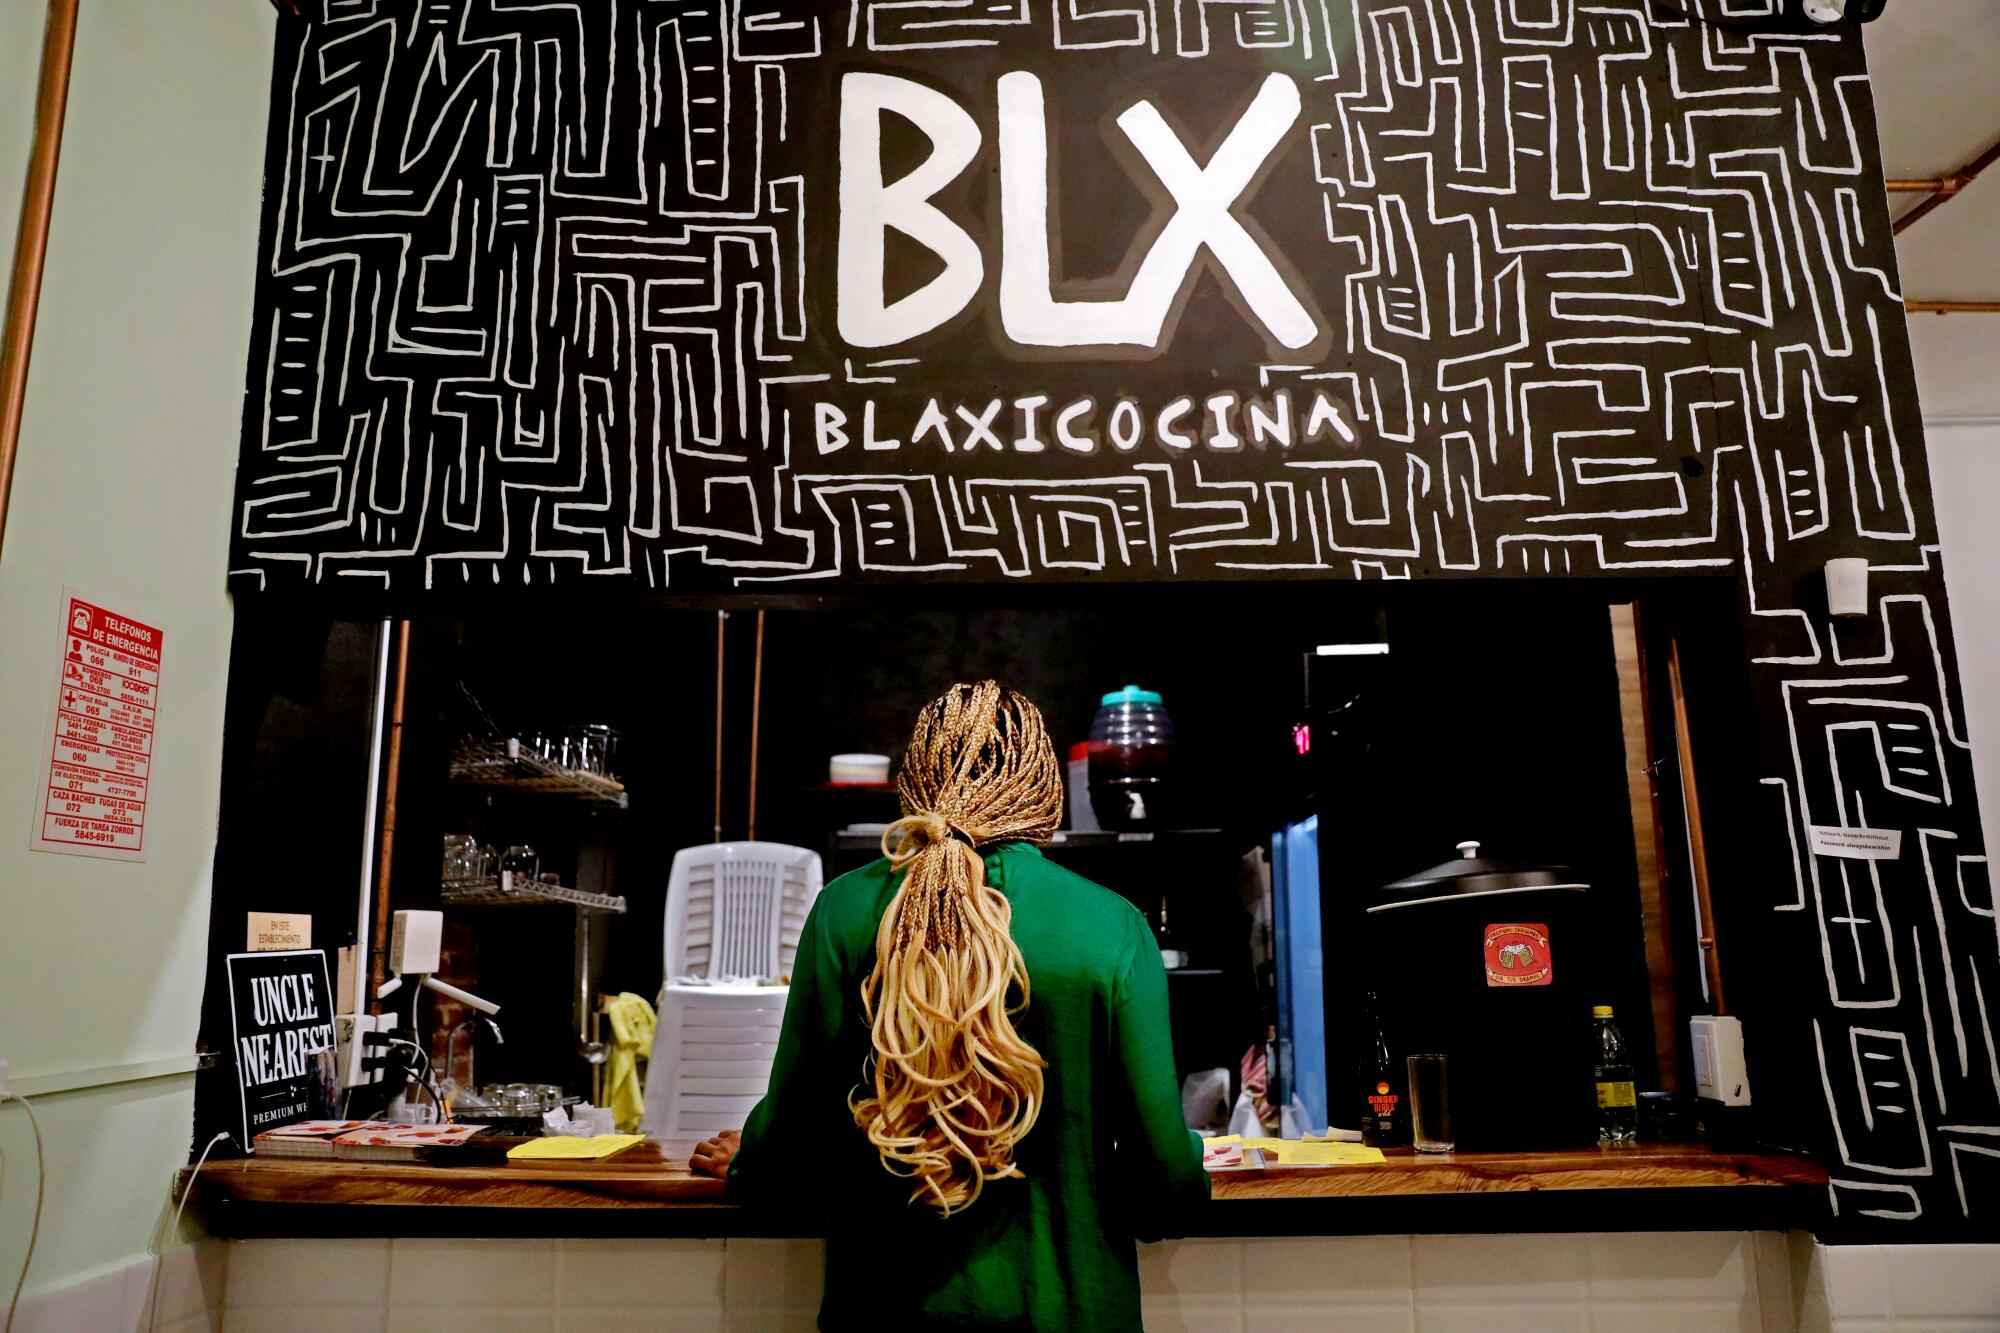 A woman at a restaurant counter under a sign that says "Blaxicocina."